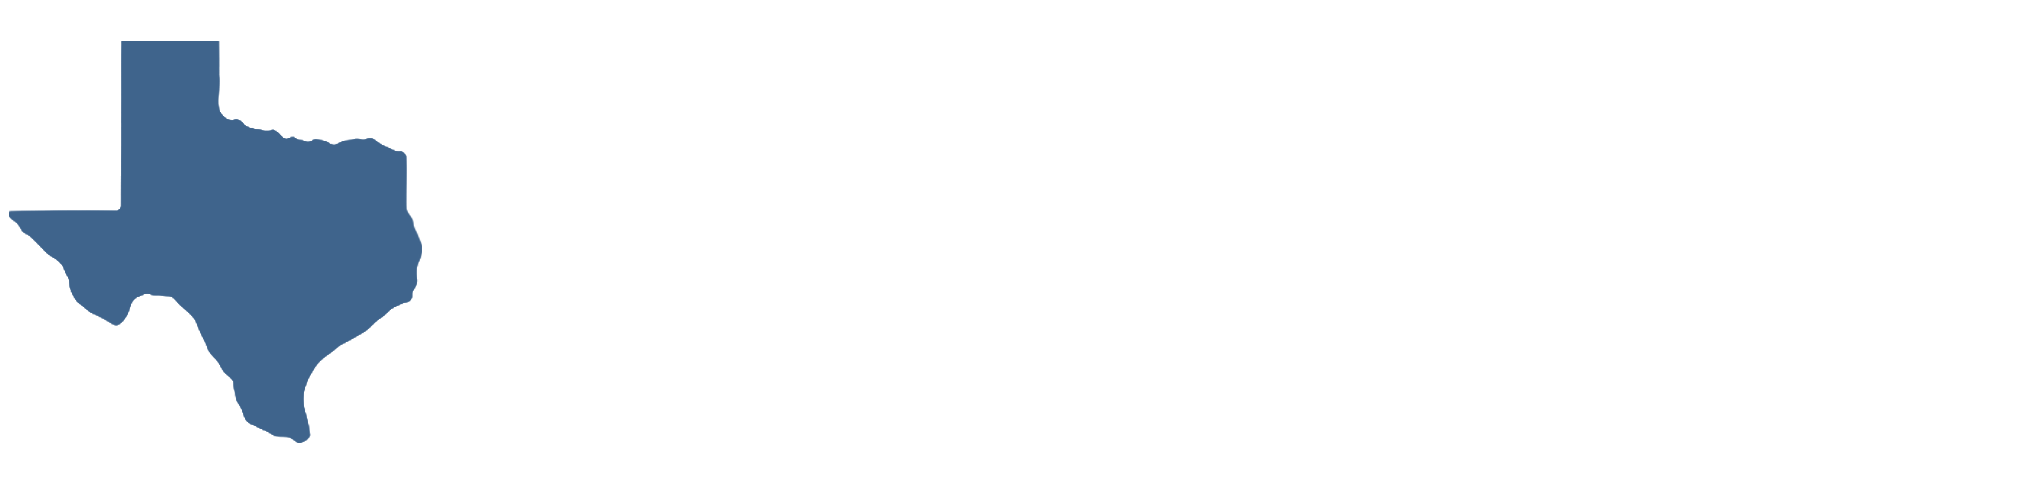 Central Texas Kitchen Center